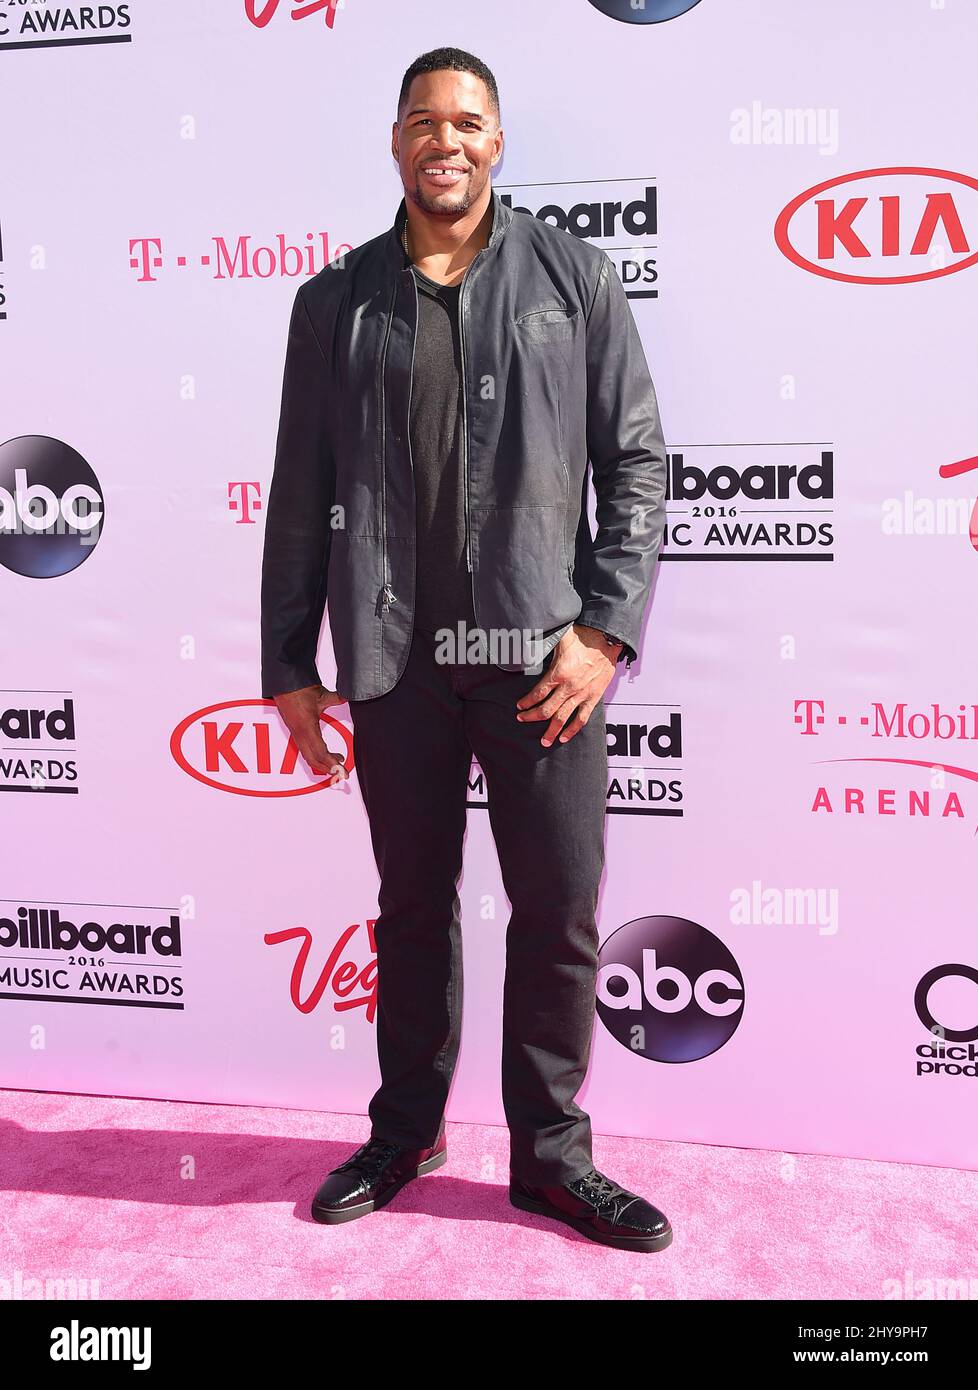 Michael Strahan attending the 2016 Billboard Music Awards in Las Vegas Stock Photo